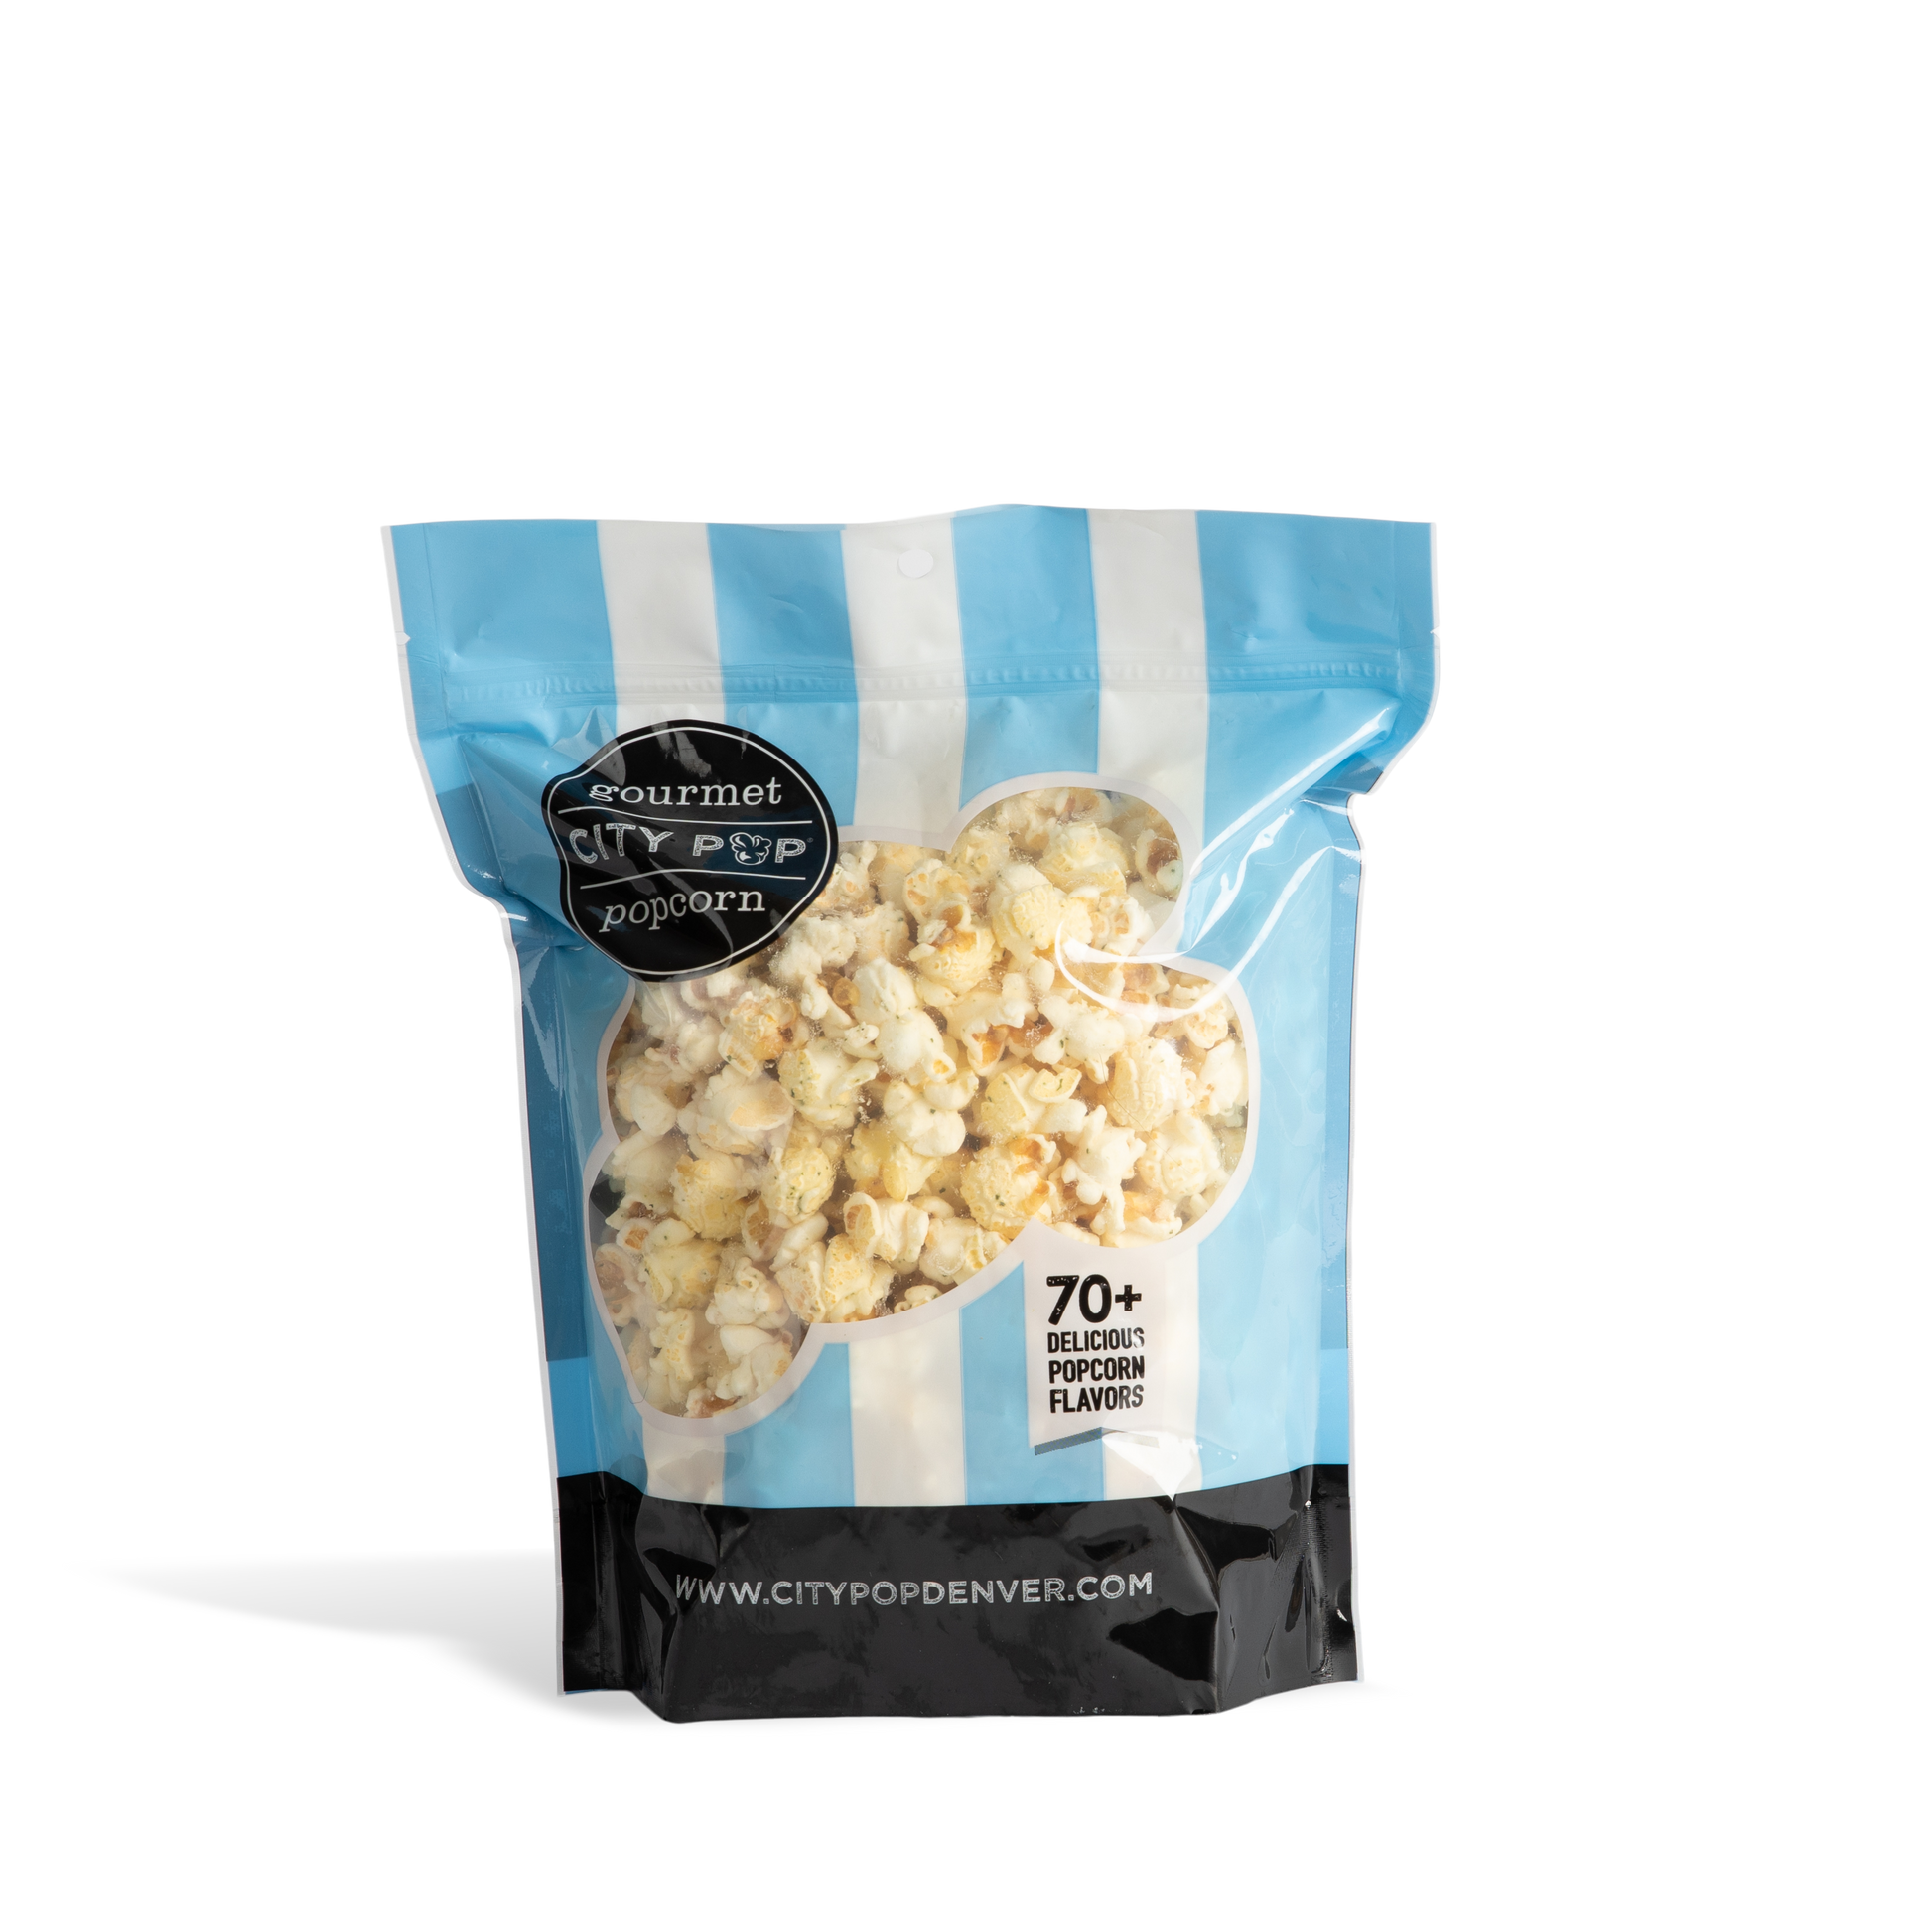 City Pop Sour Cream & Onion Popcorn Bag